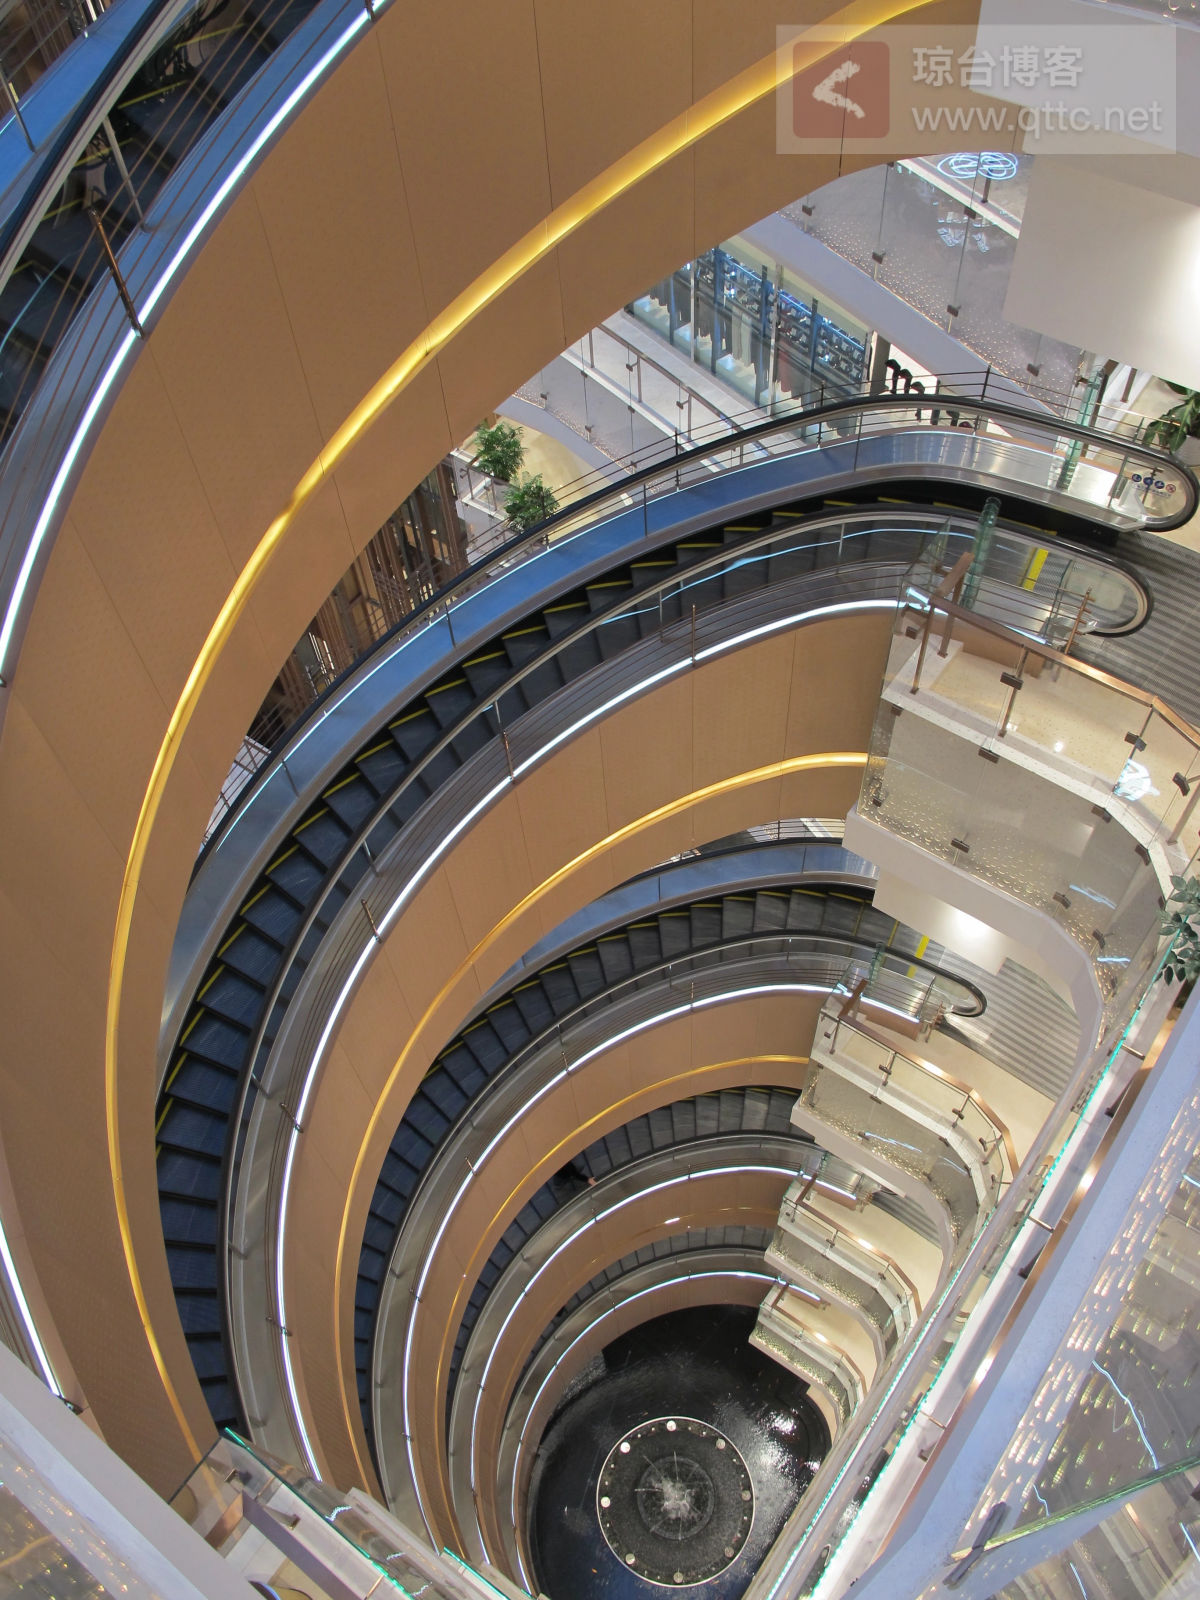 full Mall Escalator